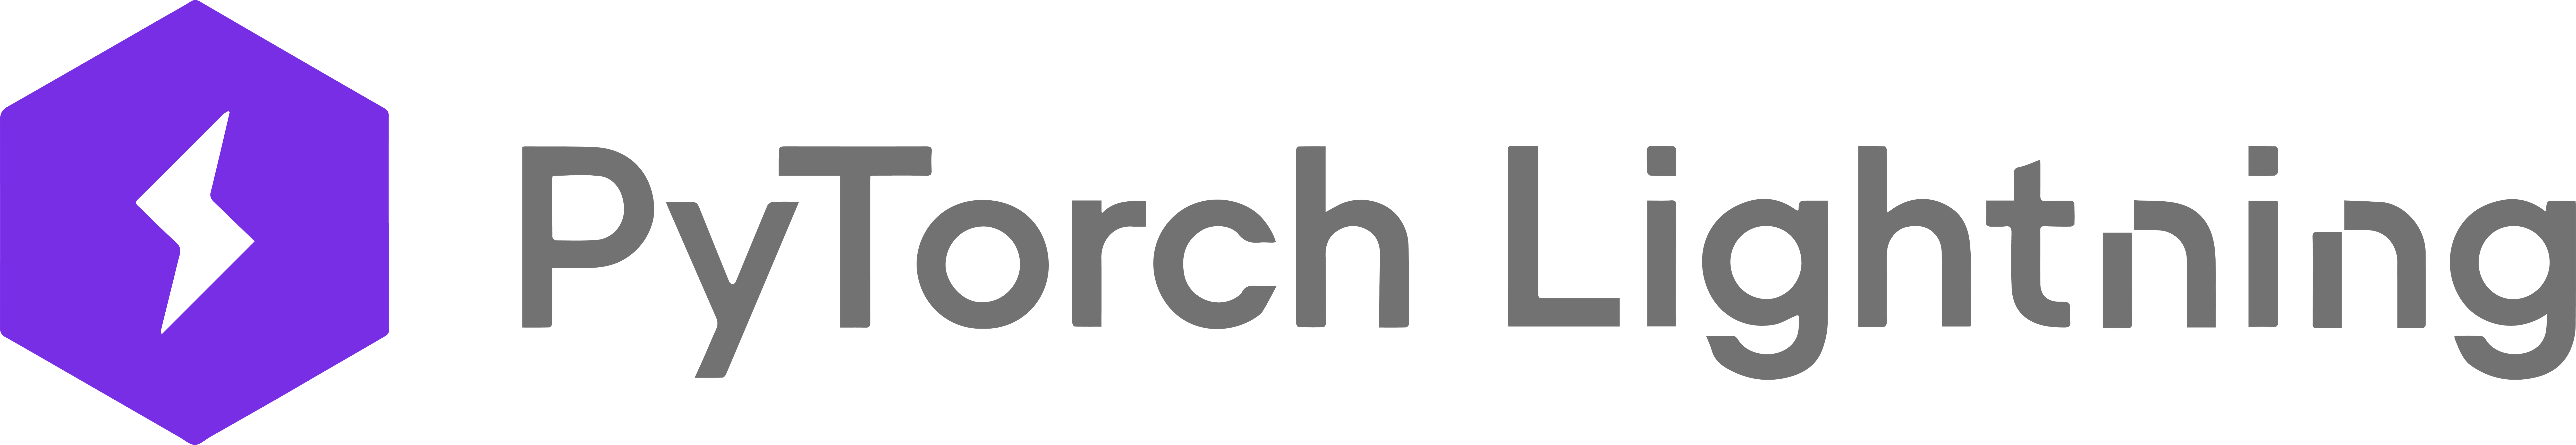 PyTorch Lightning logo